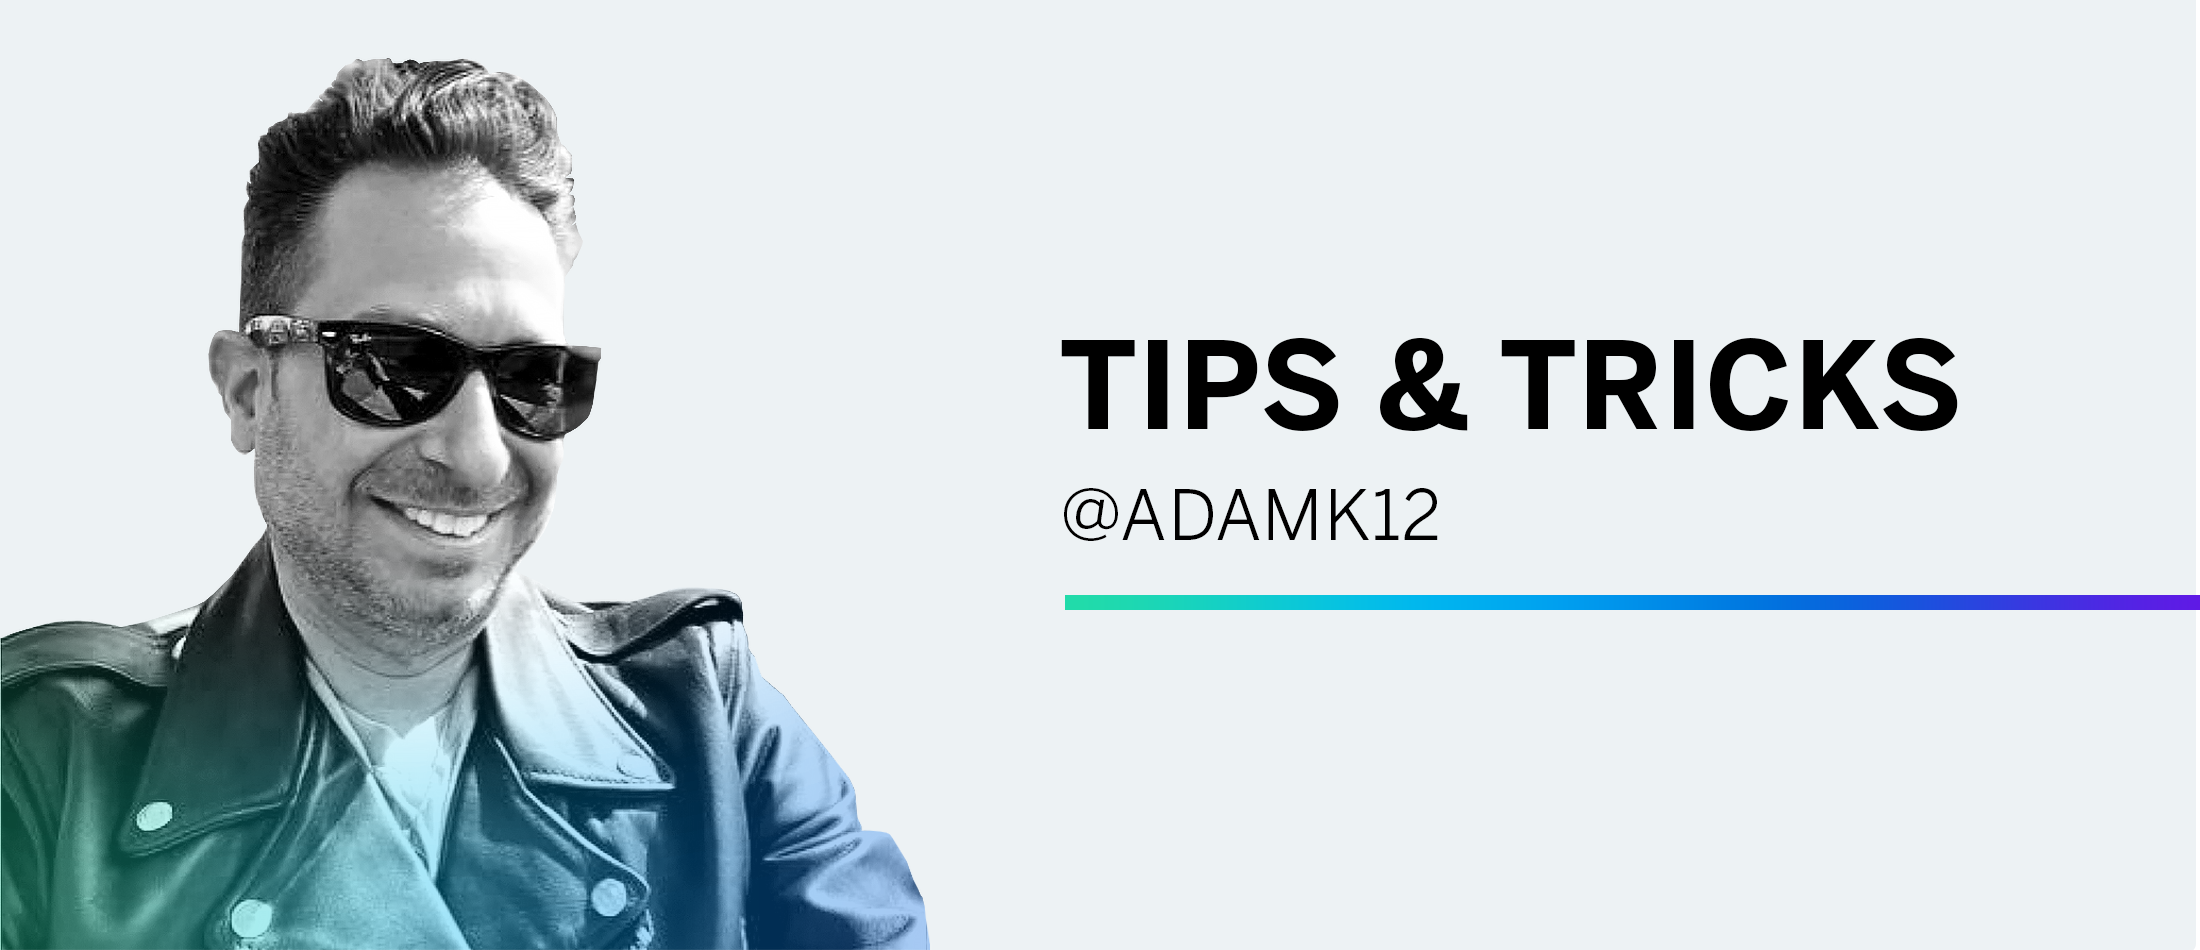 Tips & Tricks Featuring @ADAMK12